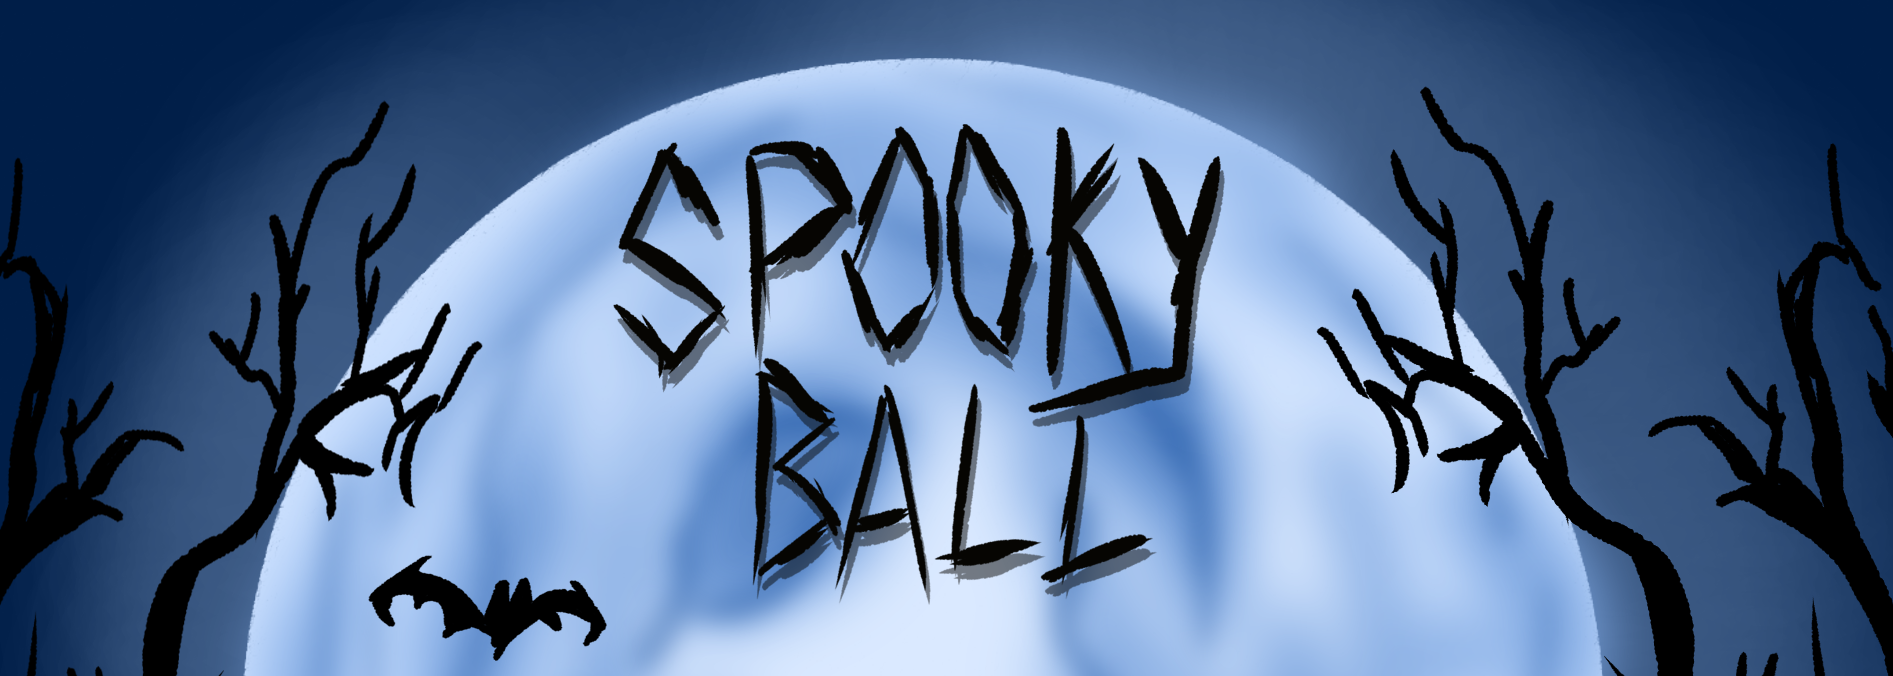 Spooky Ball